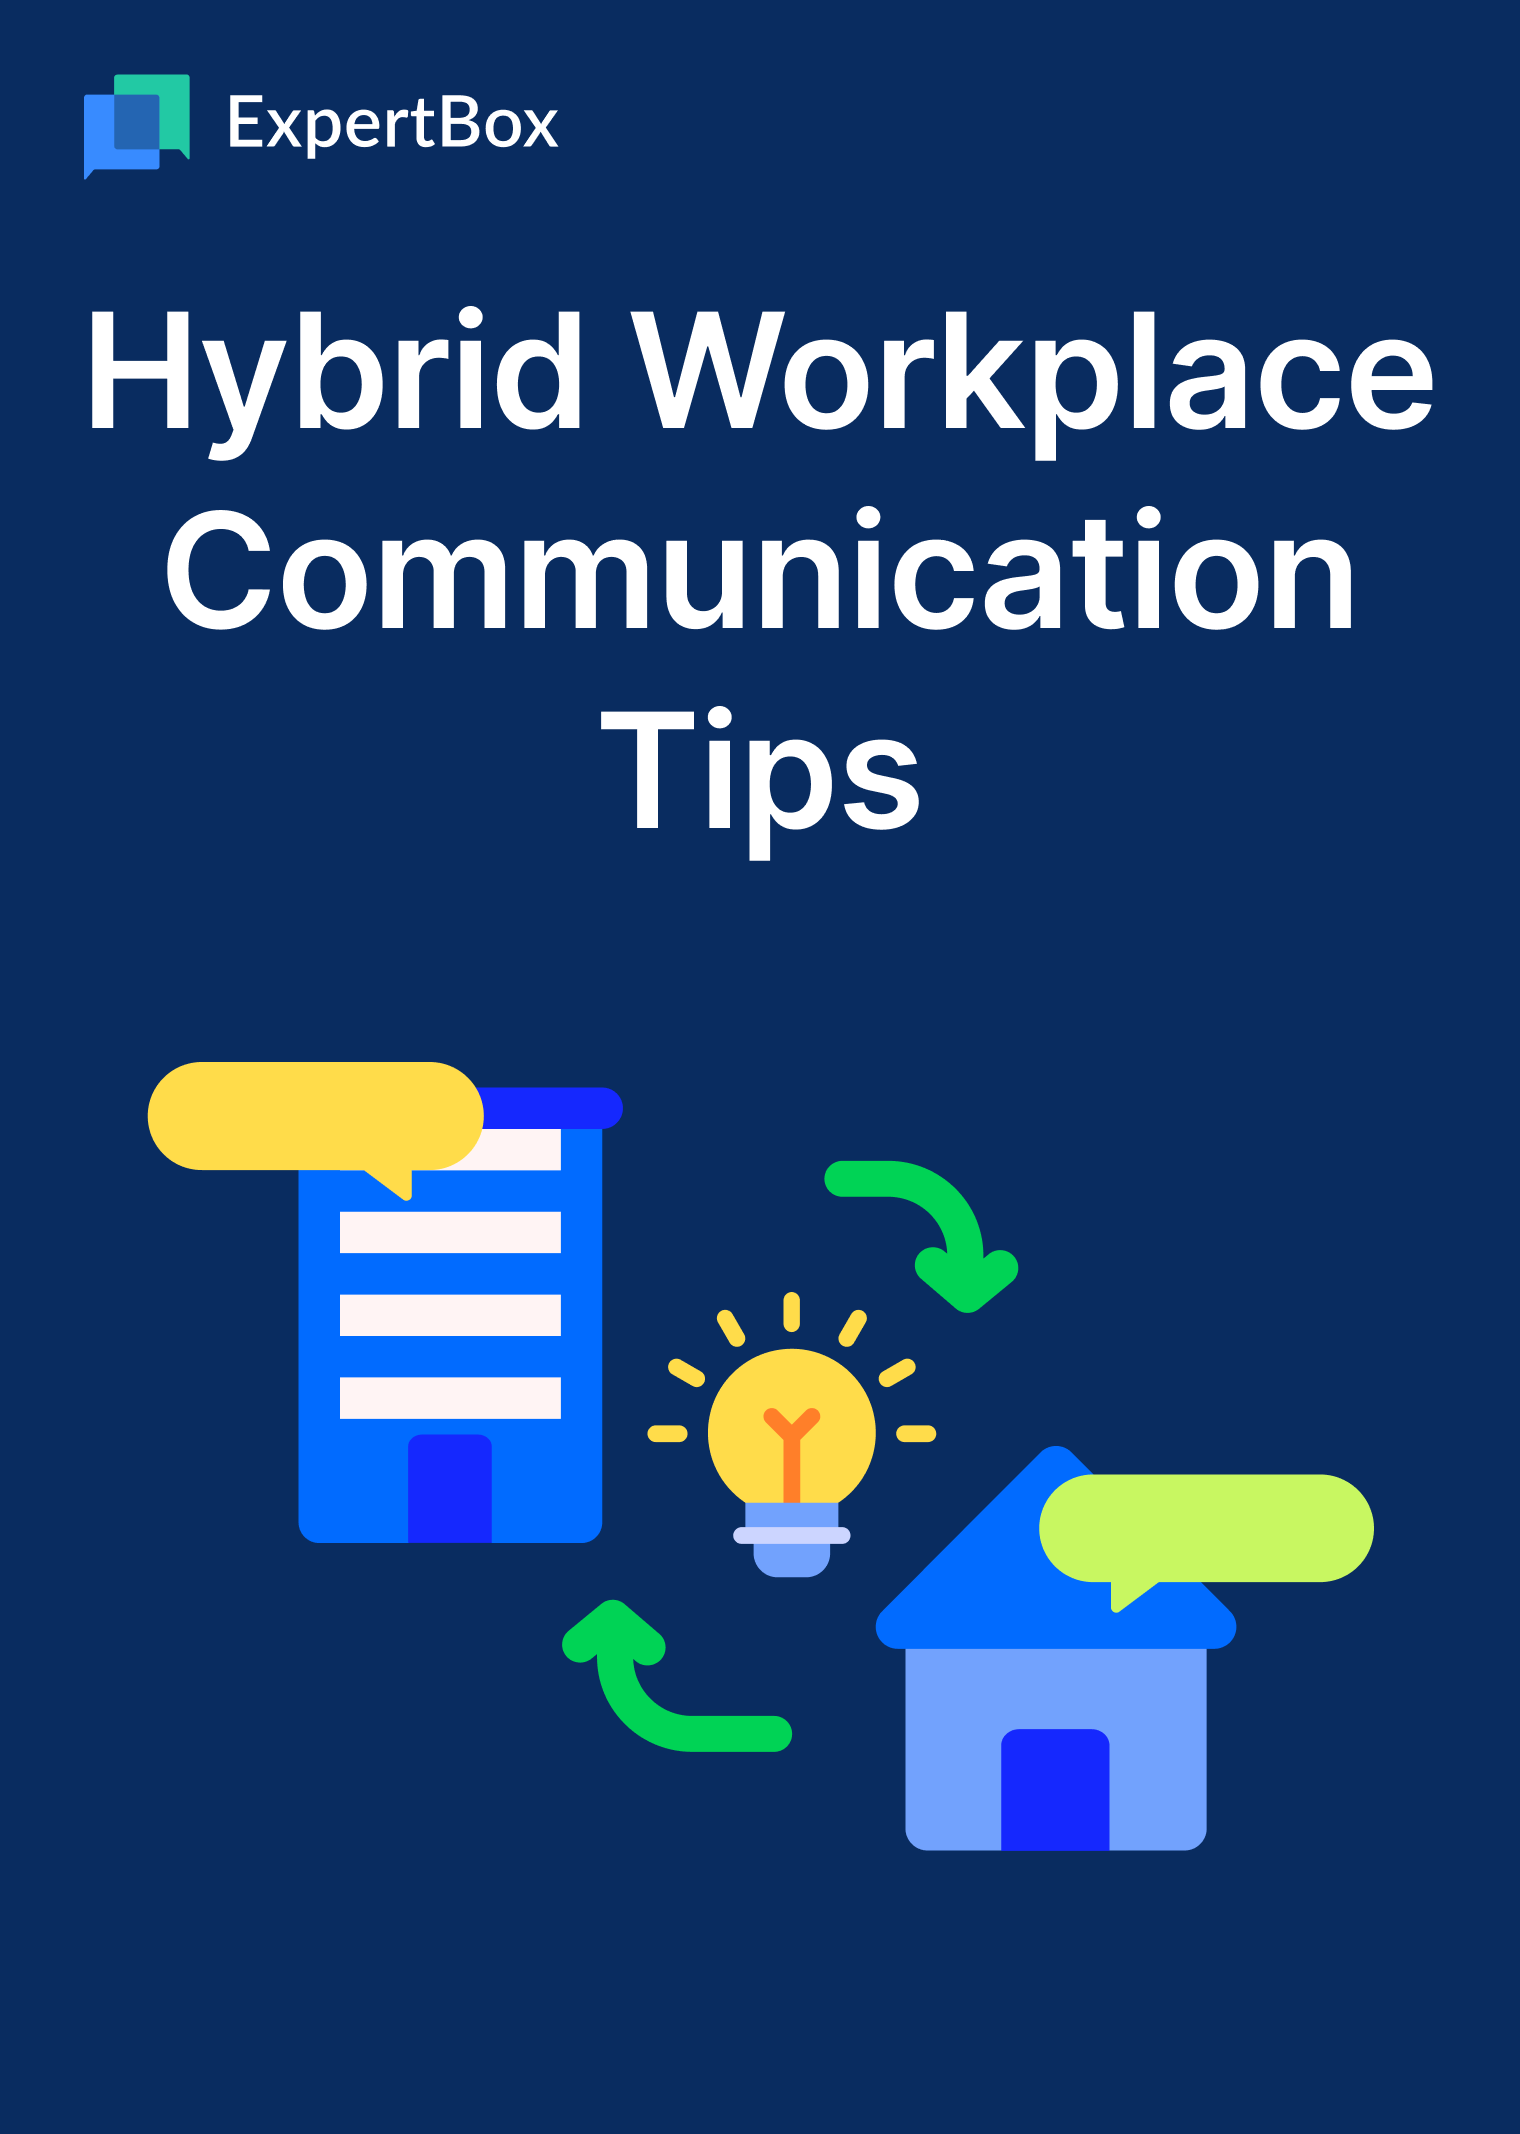 Hybrid workplace communication tips